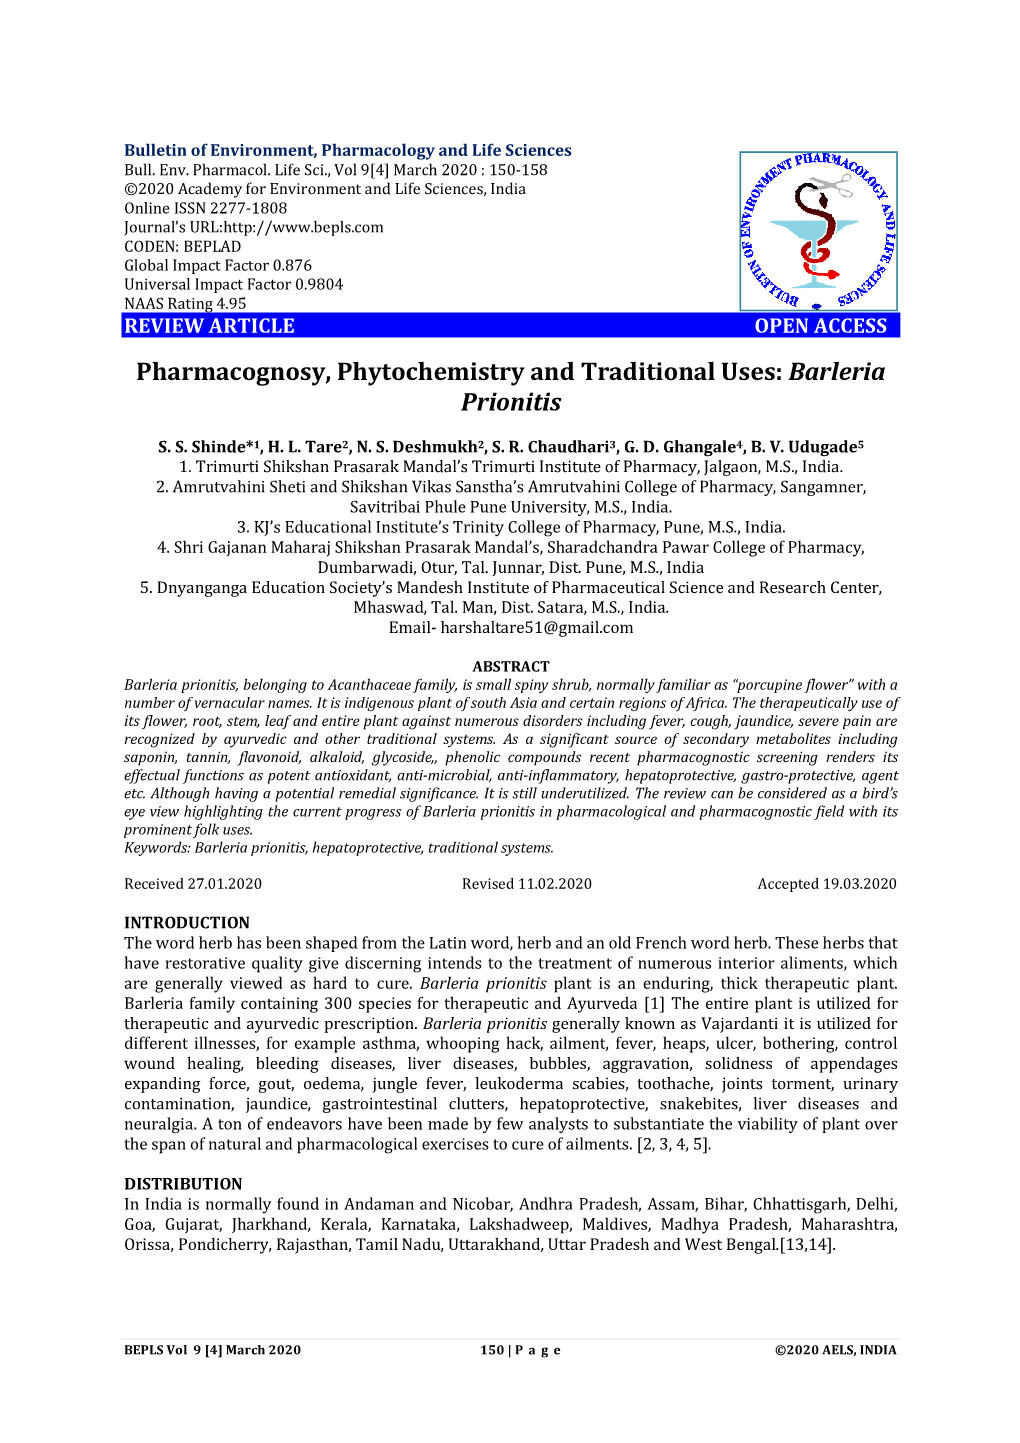 Pharmacognosy, Phytochemistry and Traditional Uses: Barleria Prionitis